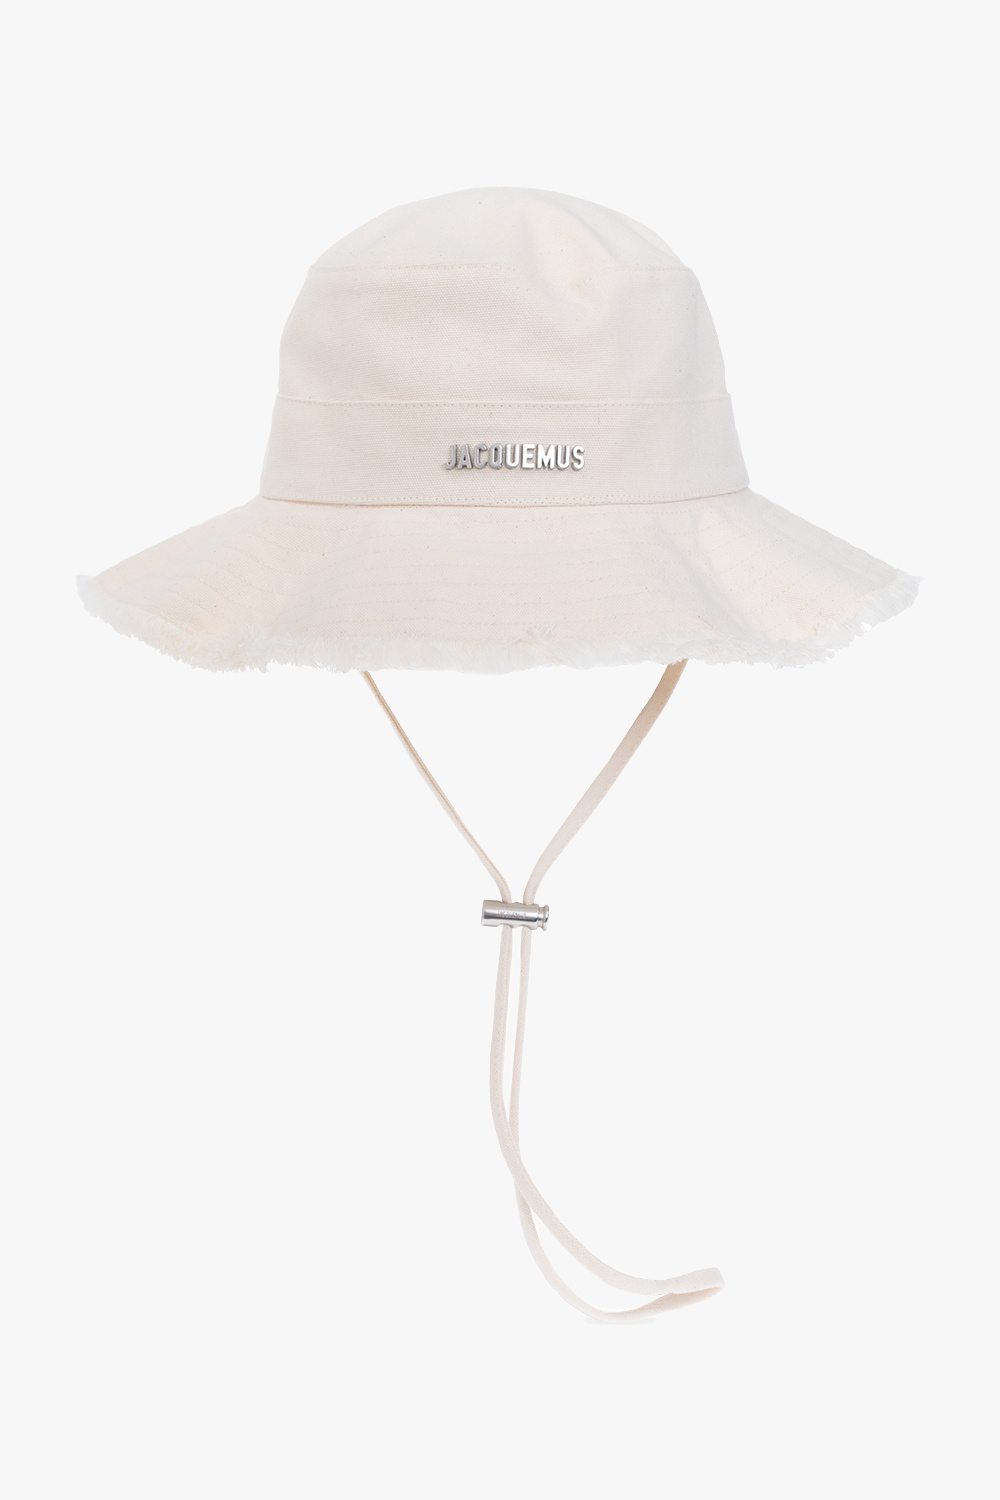 Jacquemus Bucket hat with logo | Men's Accessories | Vitkac